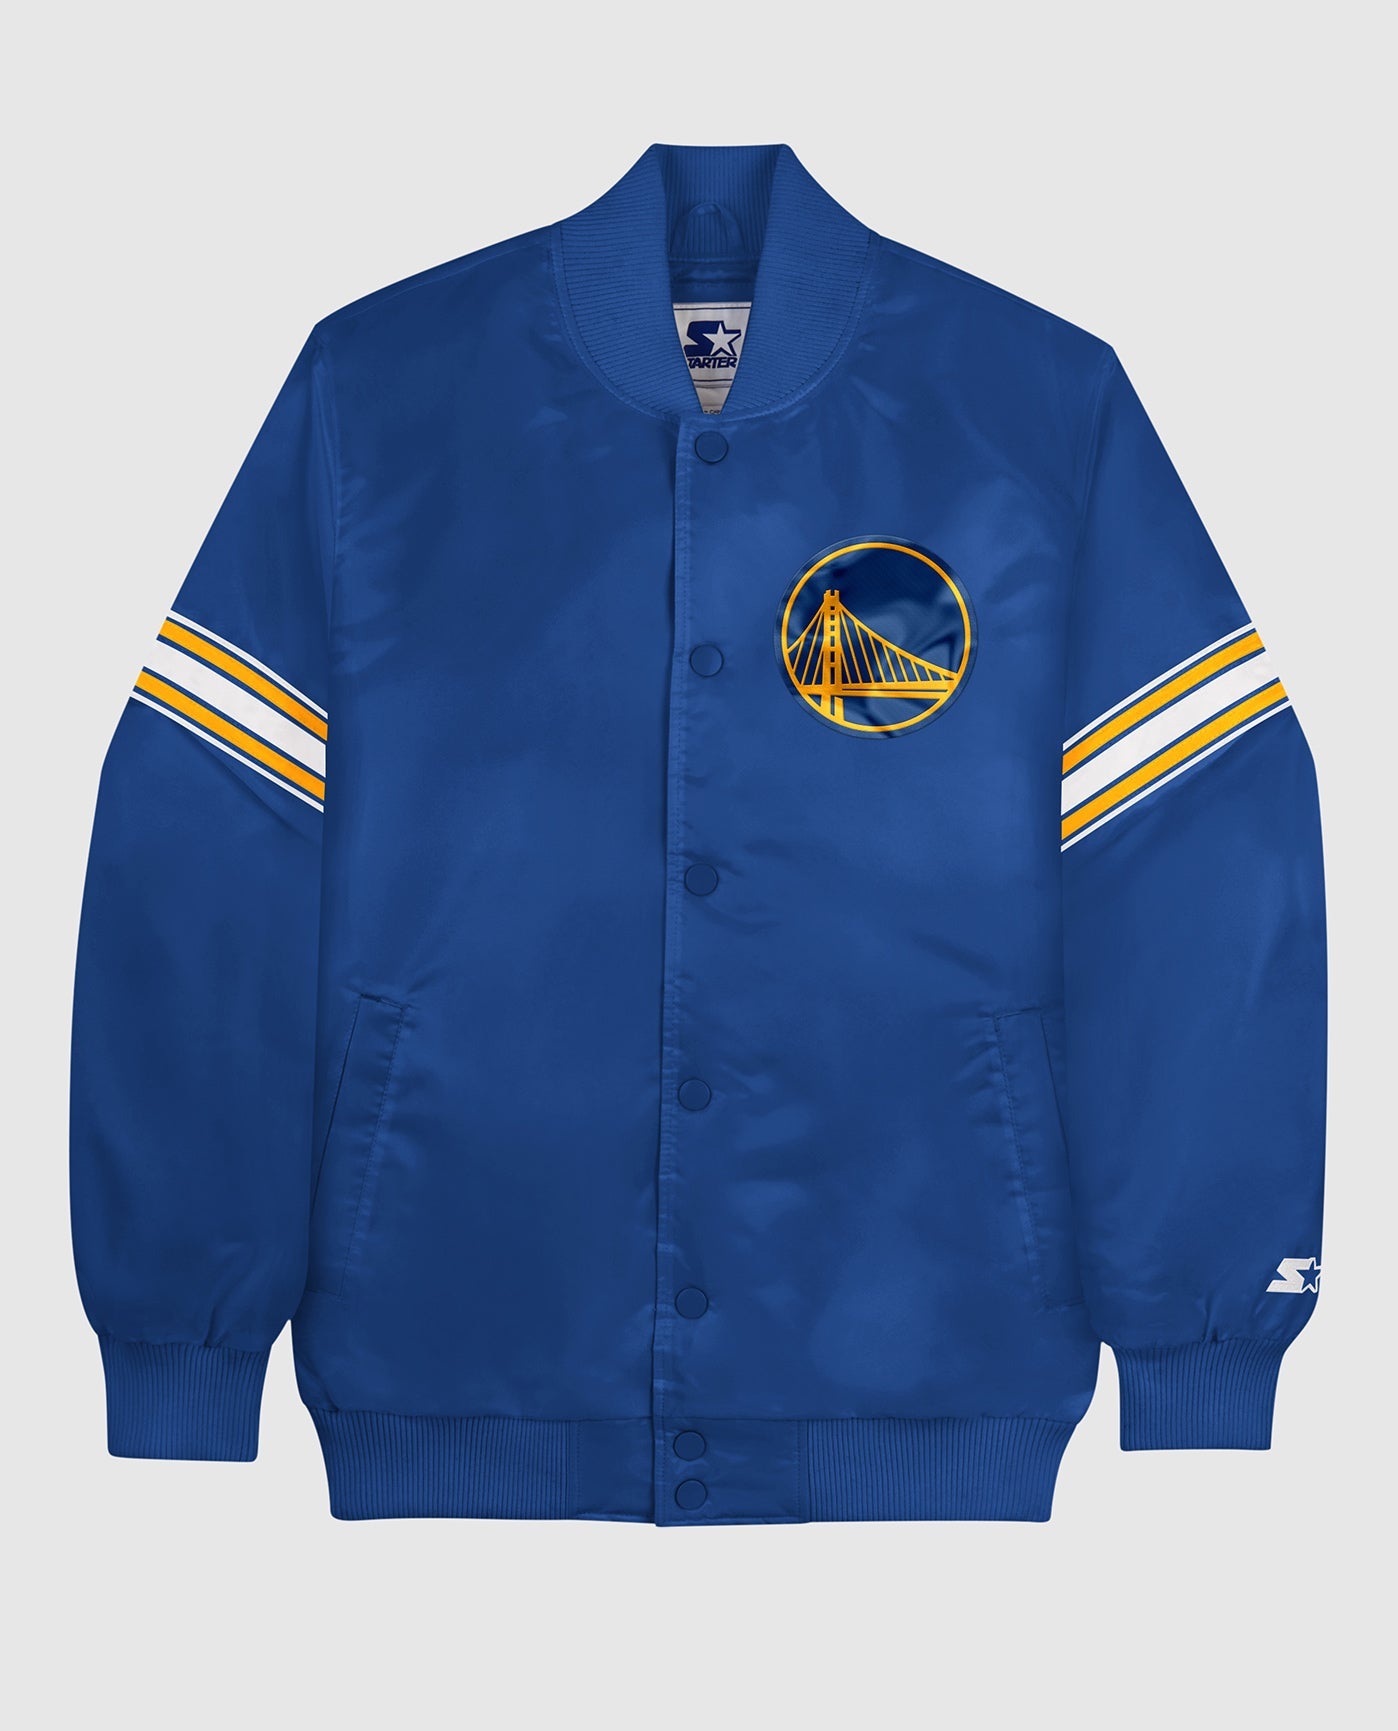 St. Louis Blues JH Design Jacket - Royal